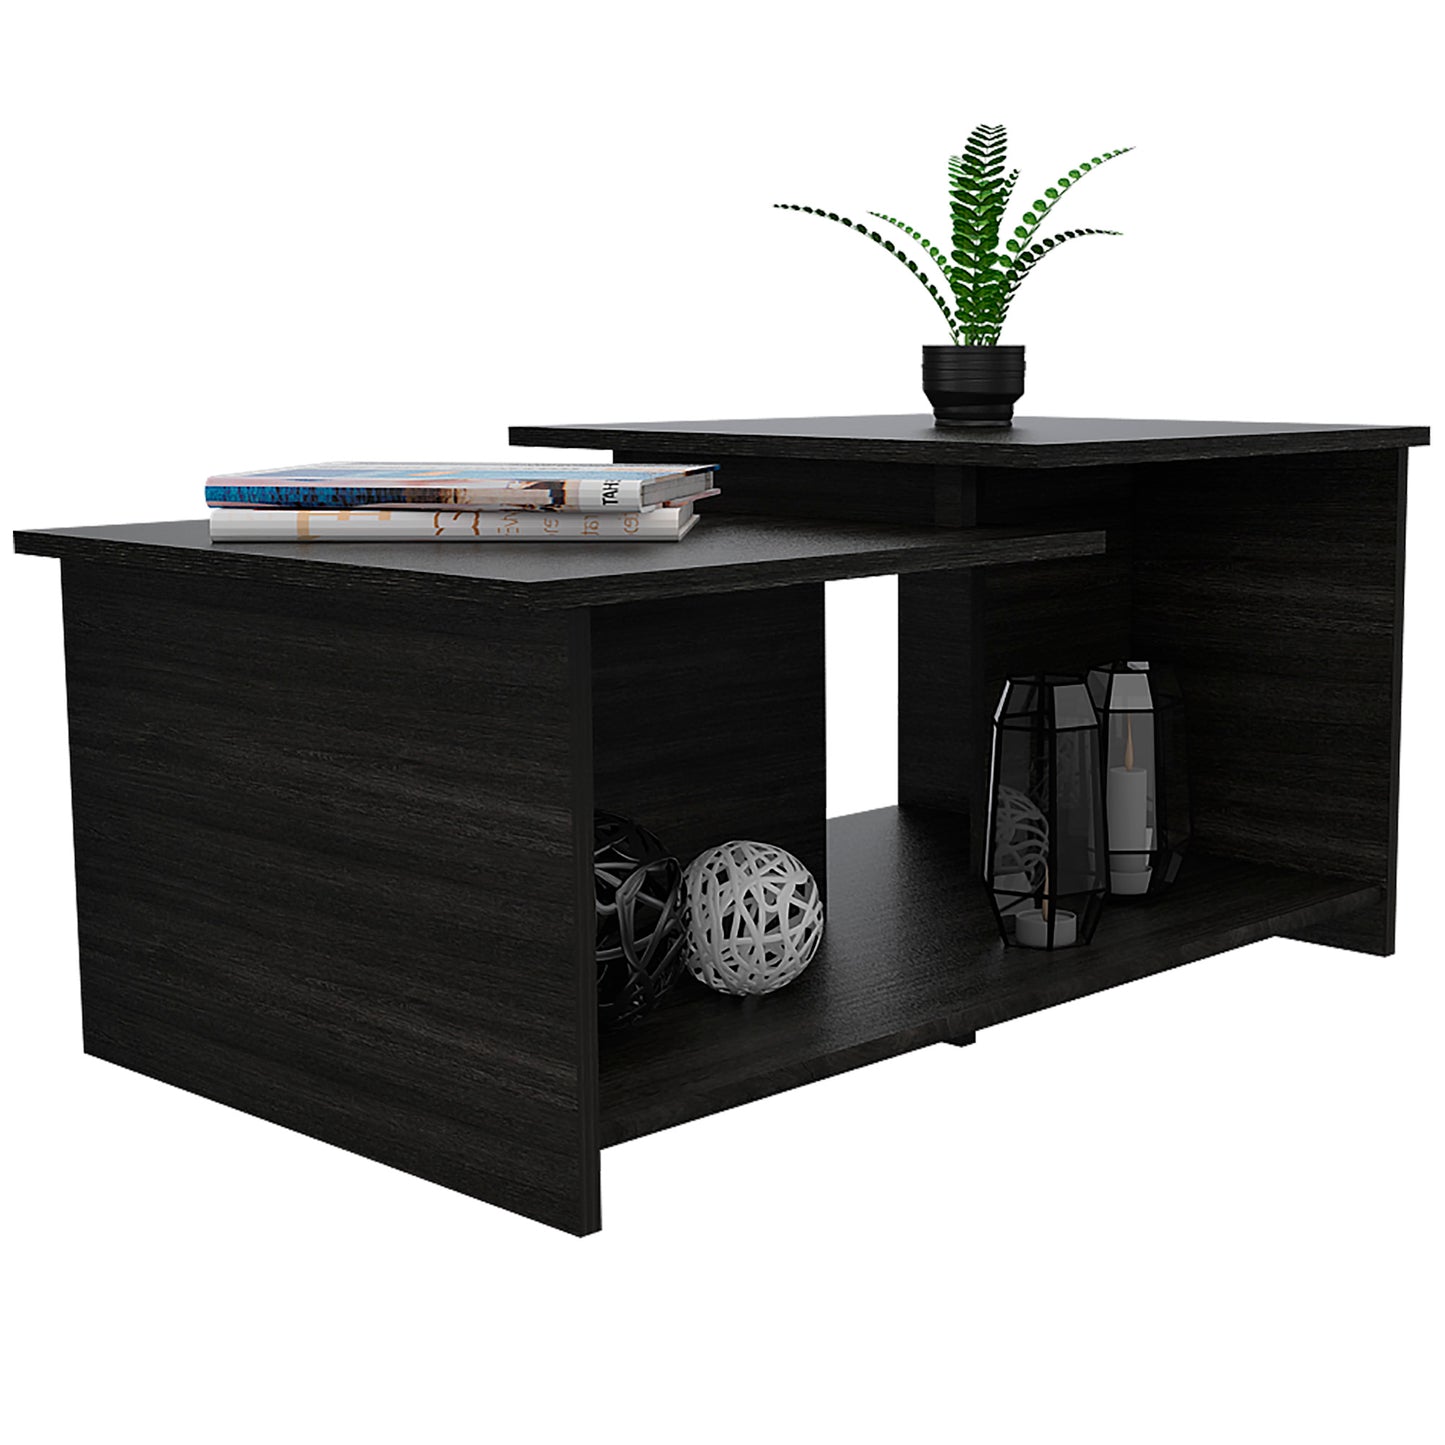 Irvine 2 Piece Living Room Set, Bar Cart + Coffee Table, Espresso / Black Wengue Finish